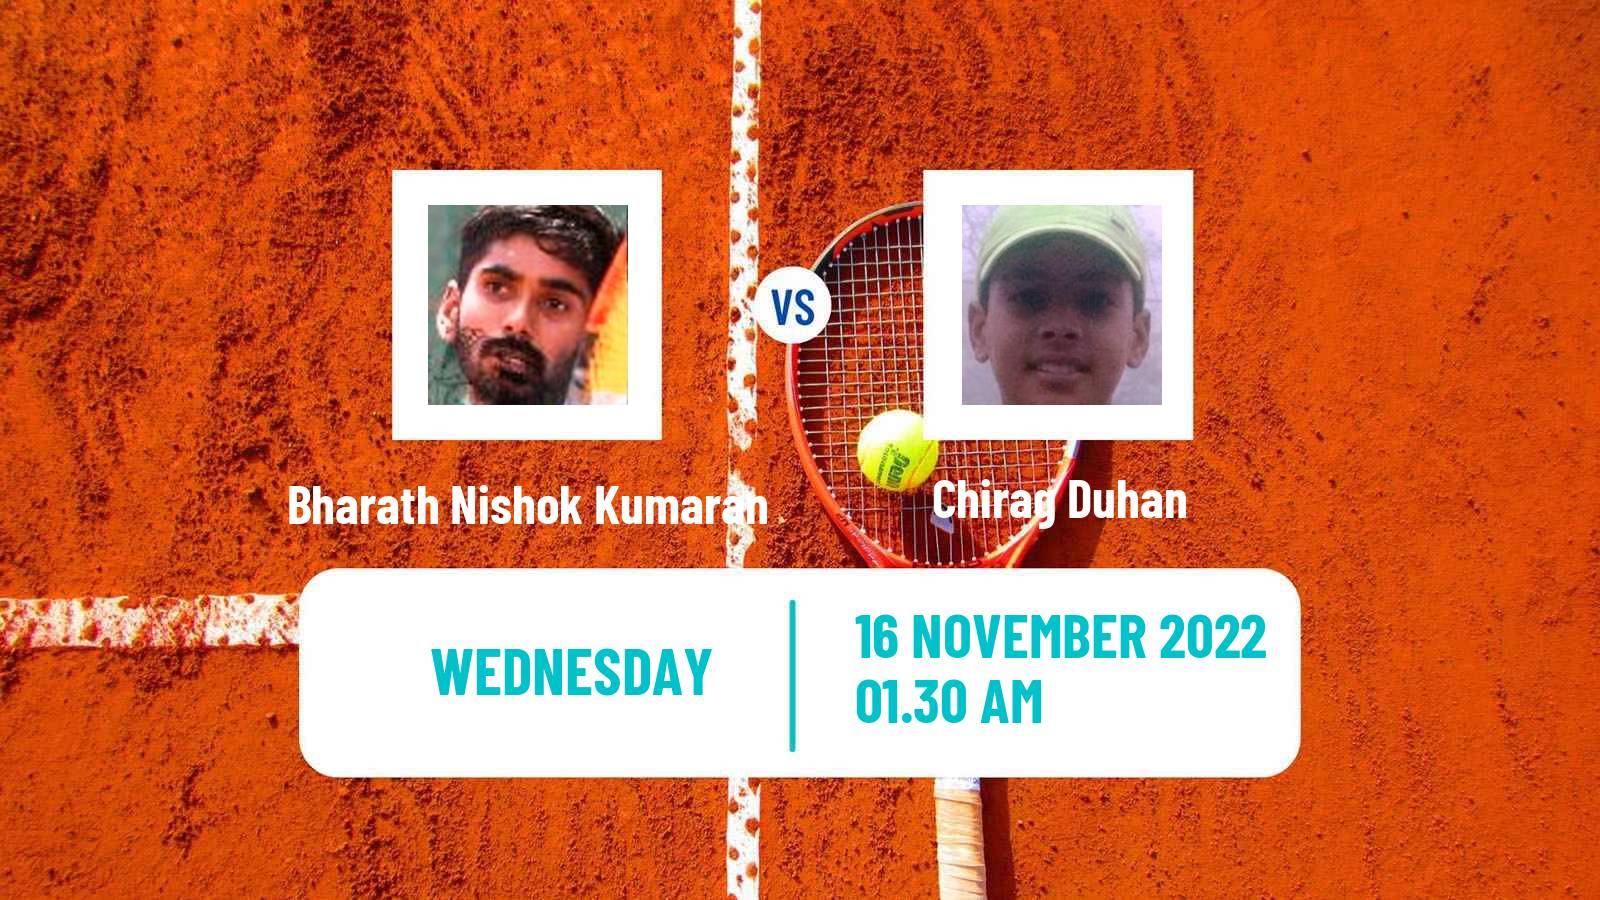 Tennis ITF Tournaments Bharath Nishok Kumaran - Chirag Duhan